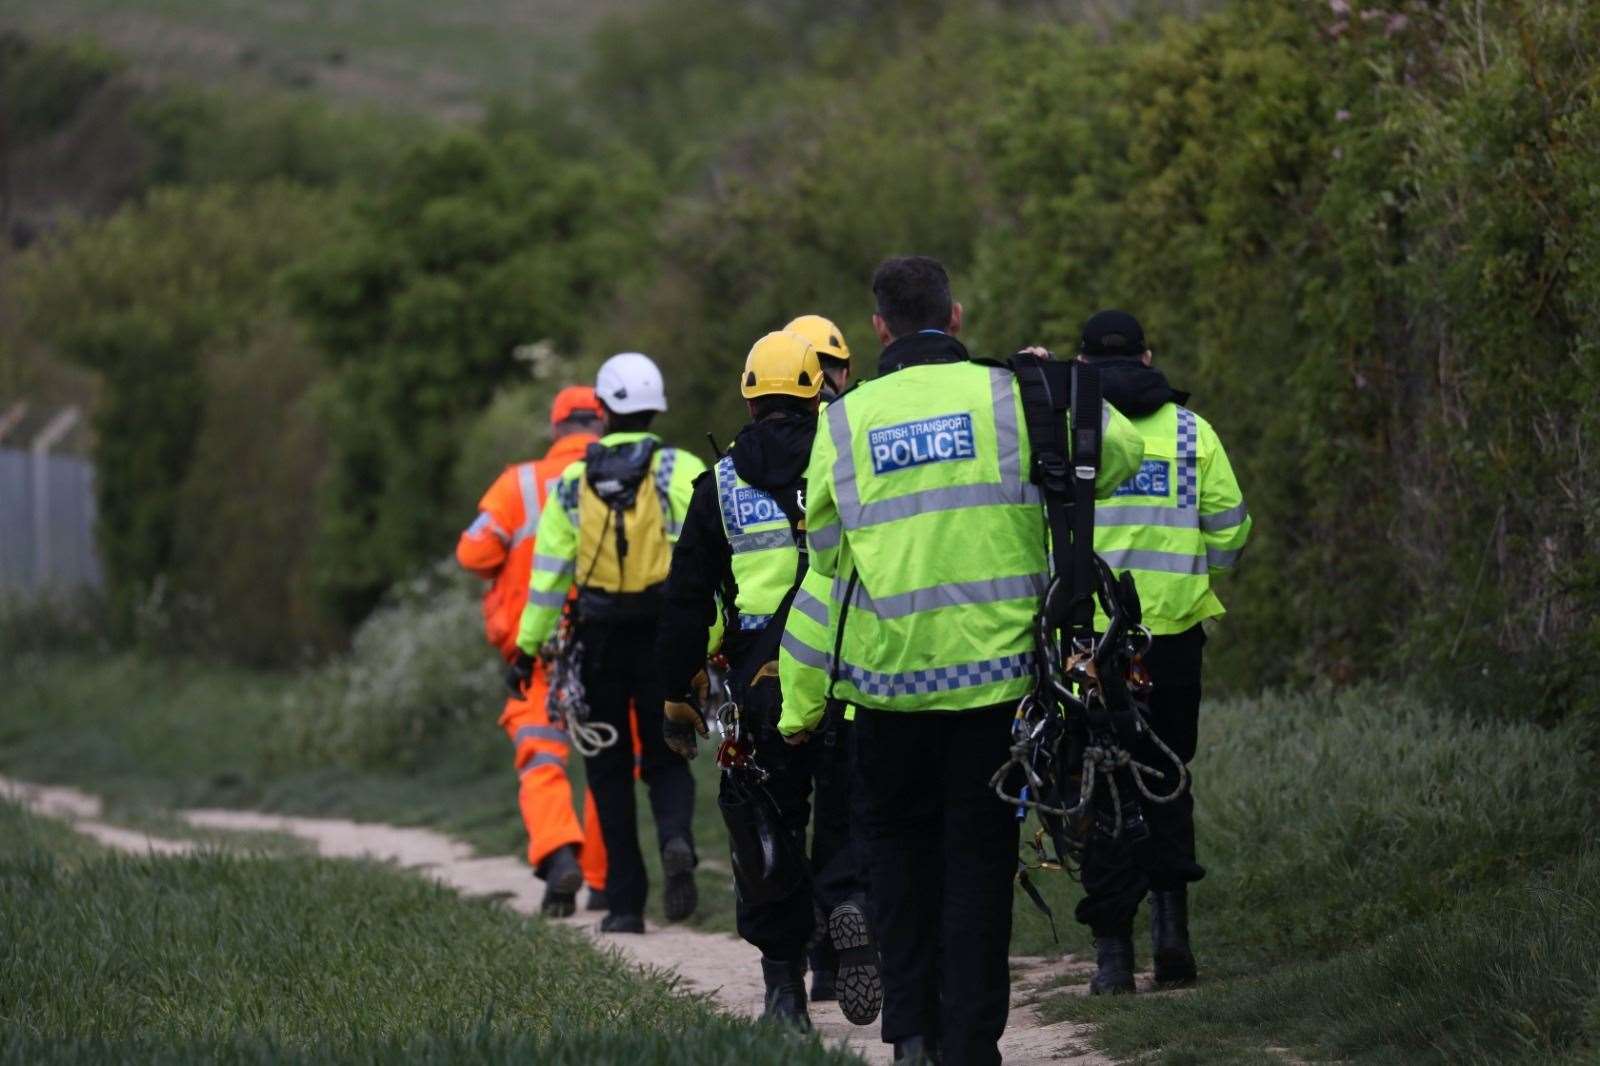 Police teams make their way to railway tracks in Aylesham Picture: UKNIP